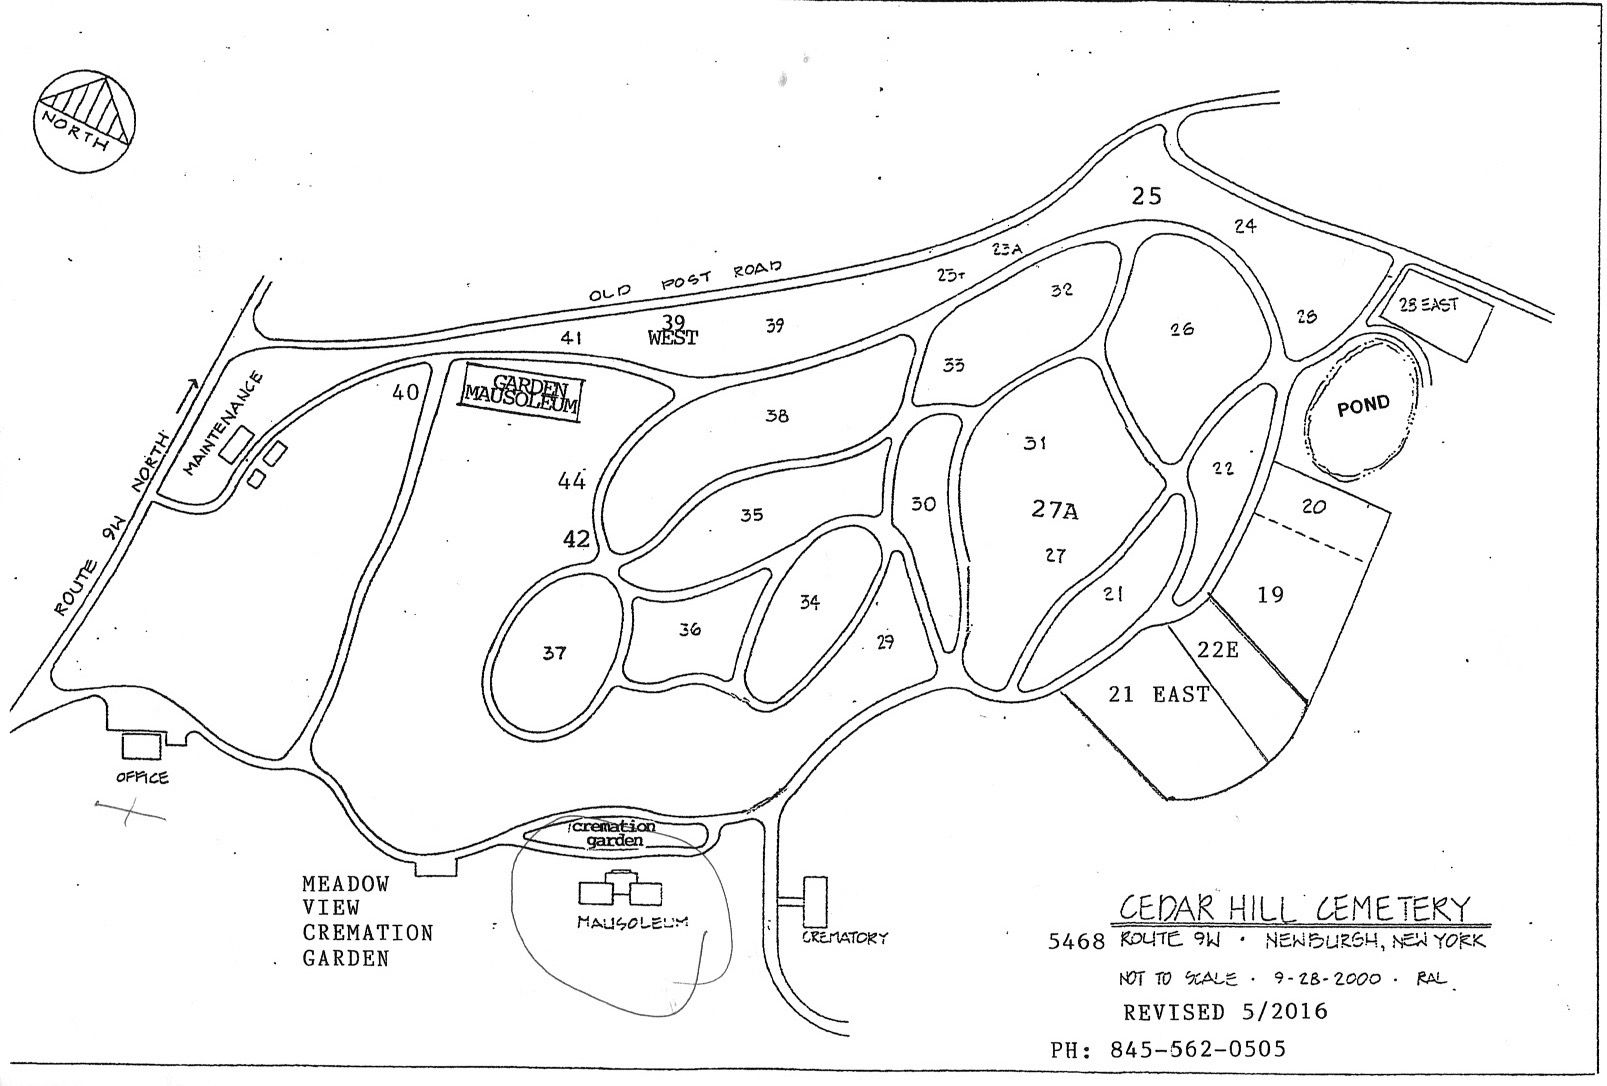 Map of Cedar Hill Cemetery in Newburgh, New York